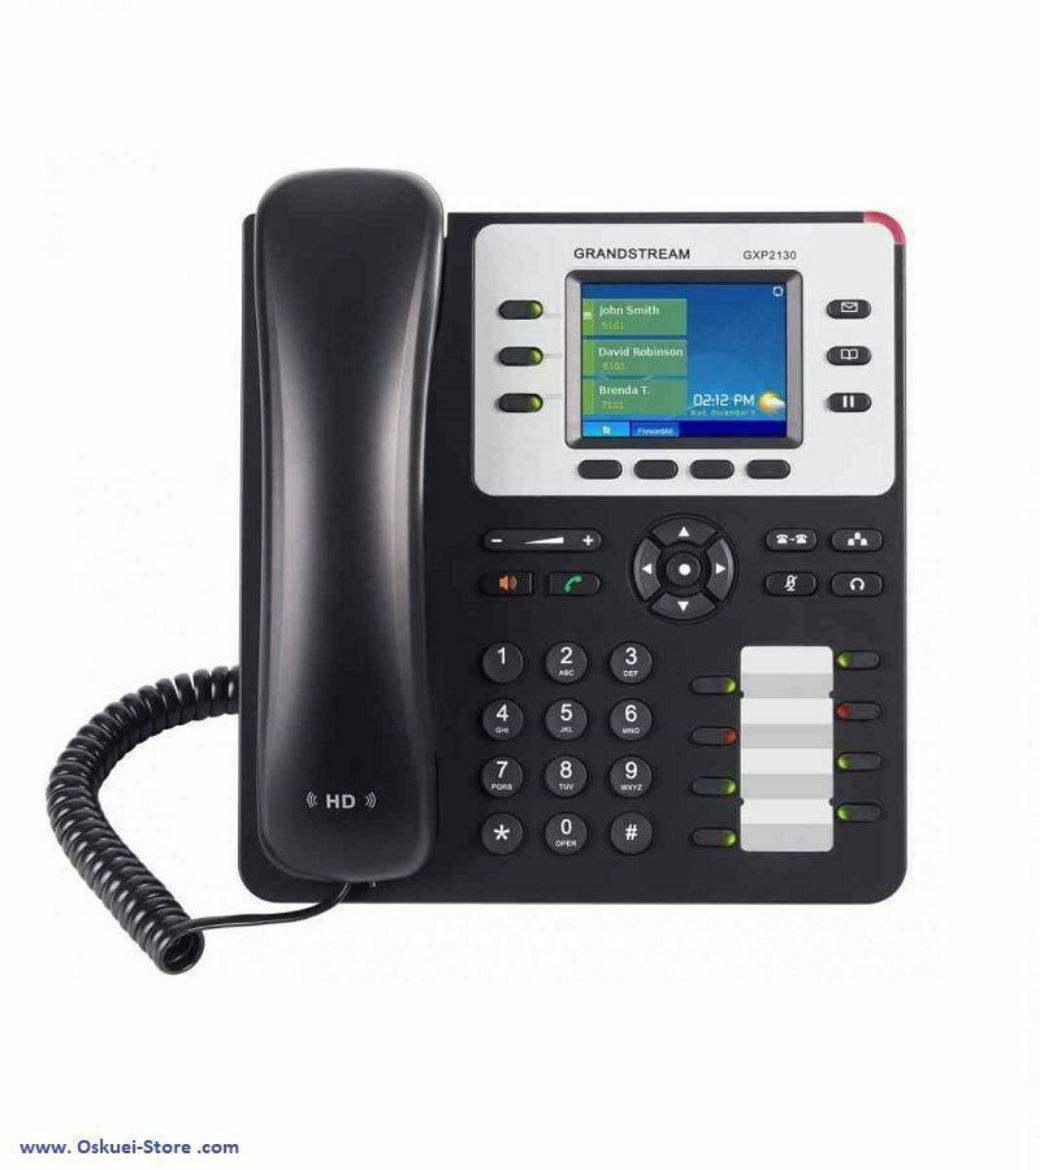 Grandstream GXP2130 VoIP SIP Telephone Black